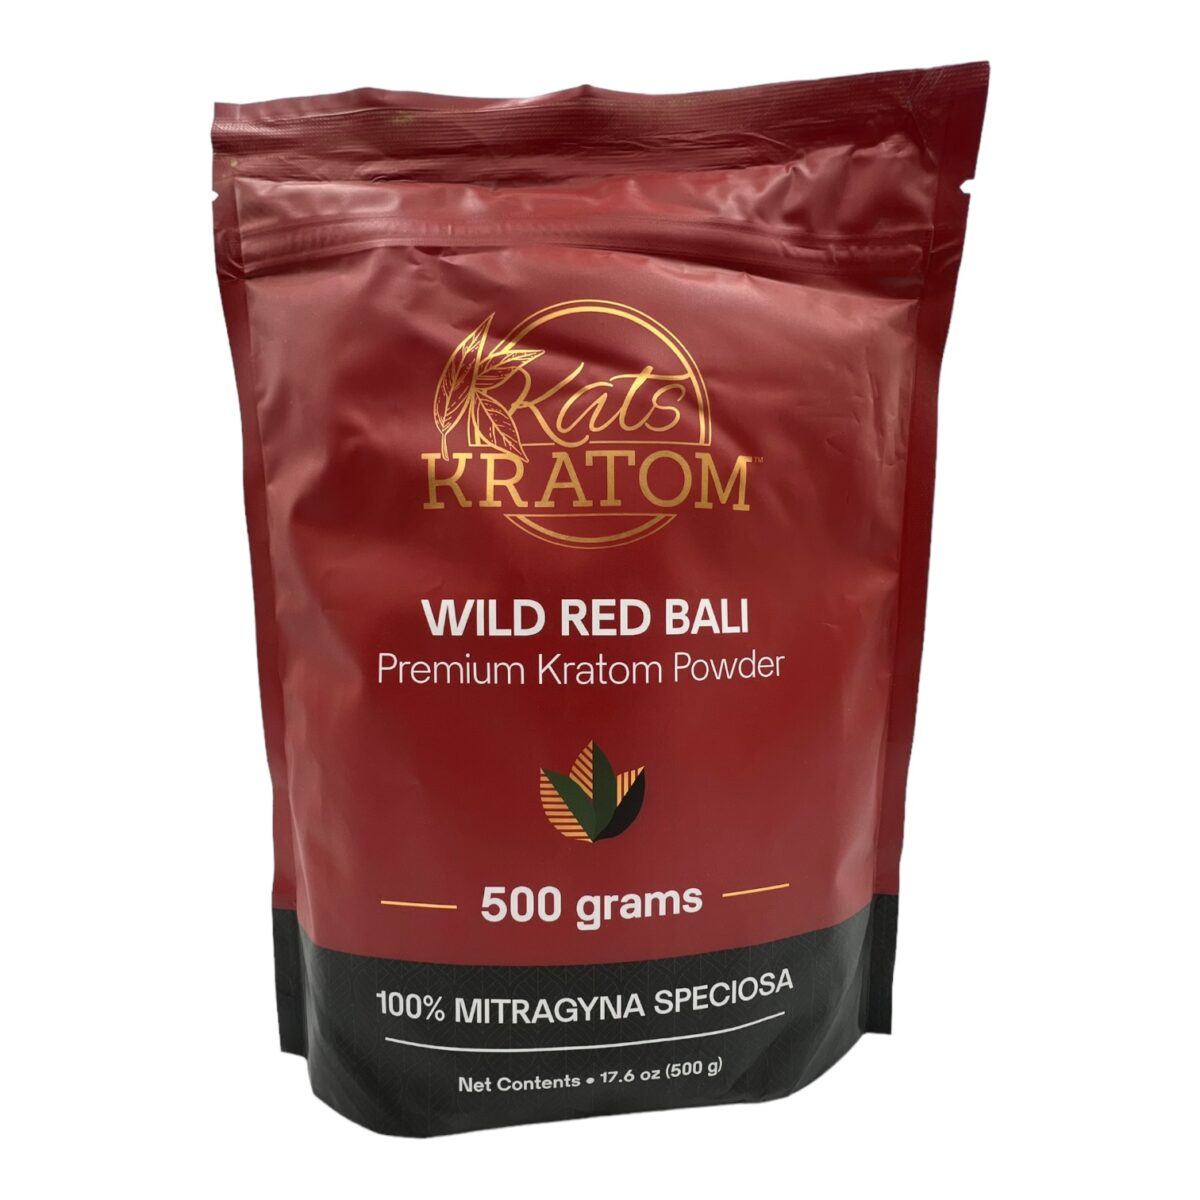 Kats Kratom Wild Red Bali Powder